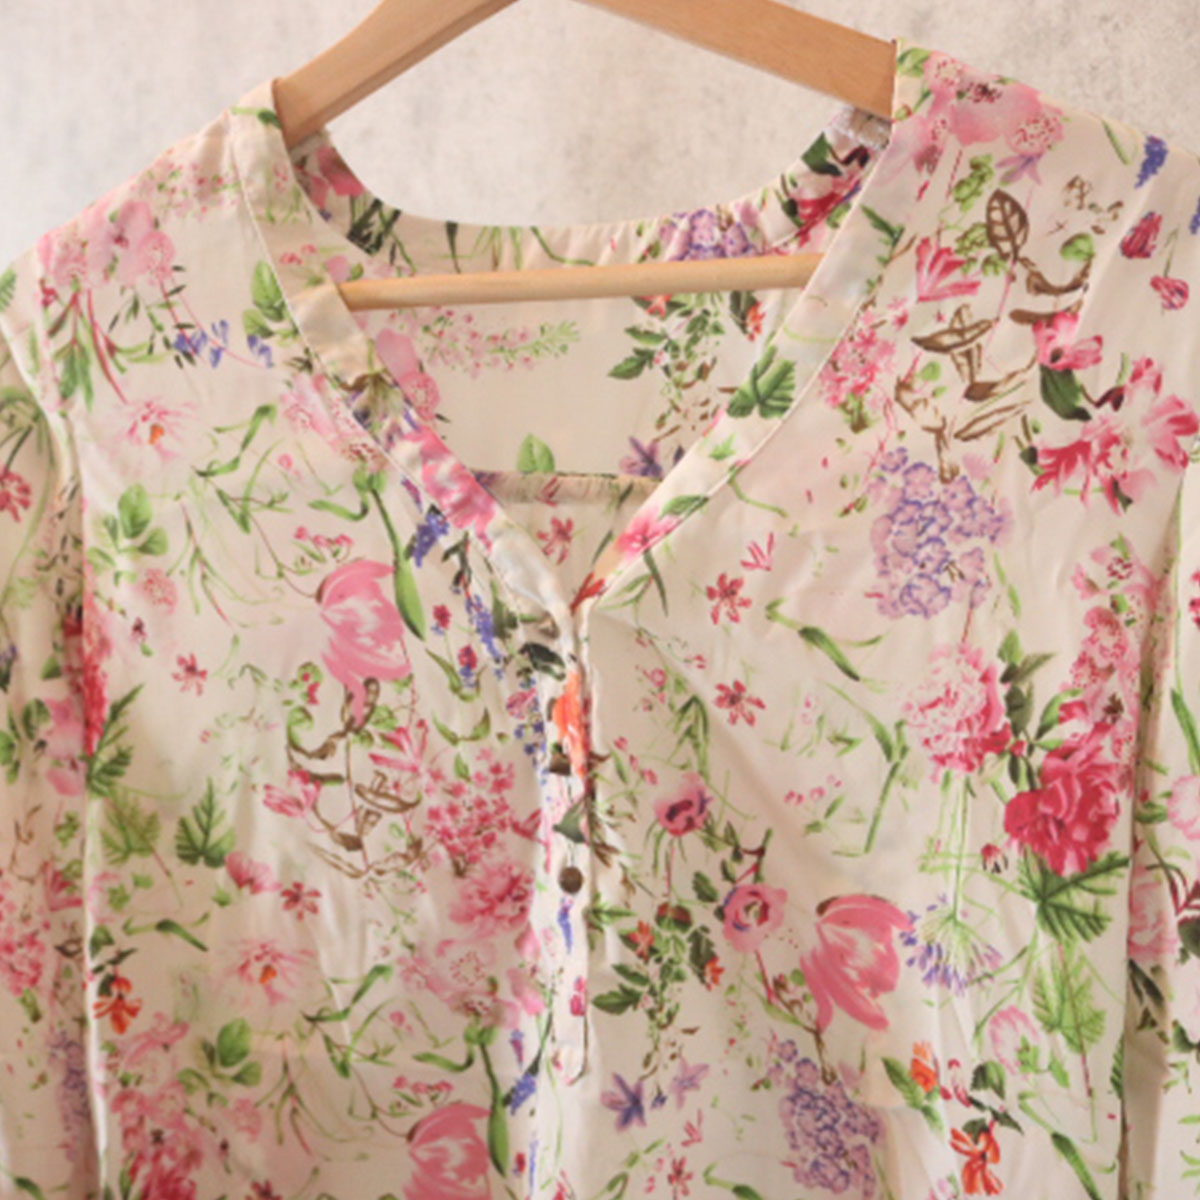 b03 - no brand shirtcottonwhite with floral pattern45,000